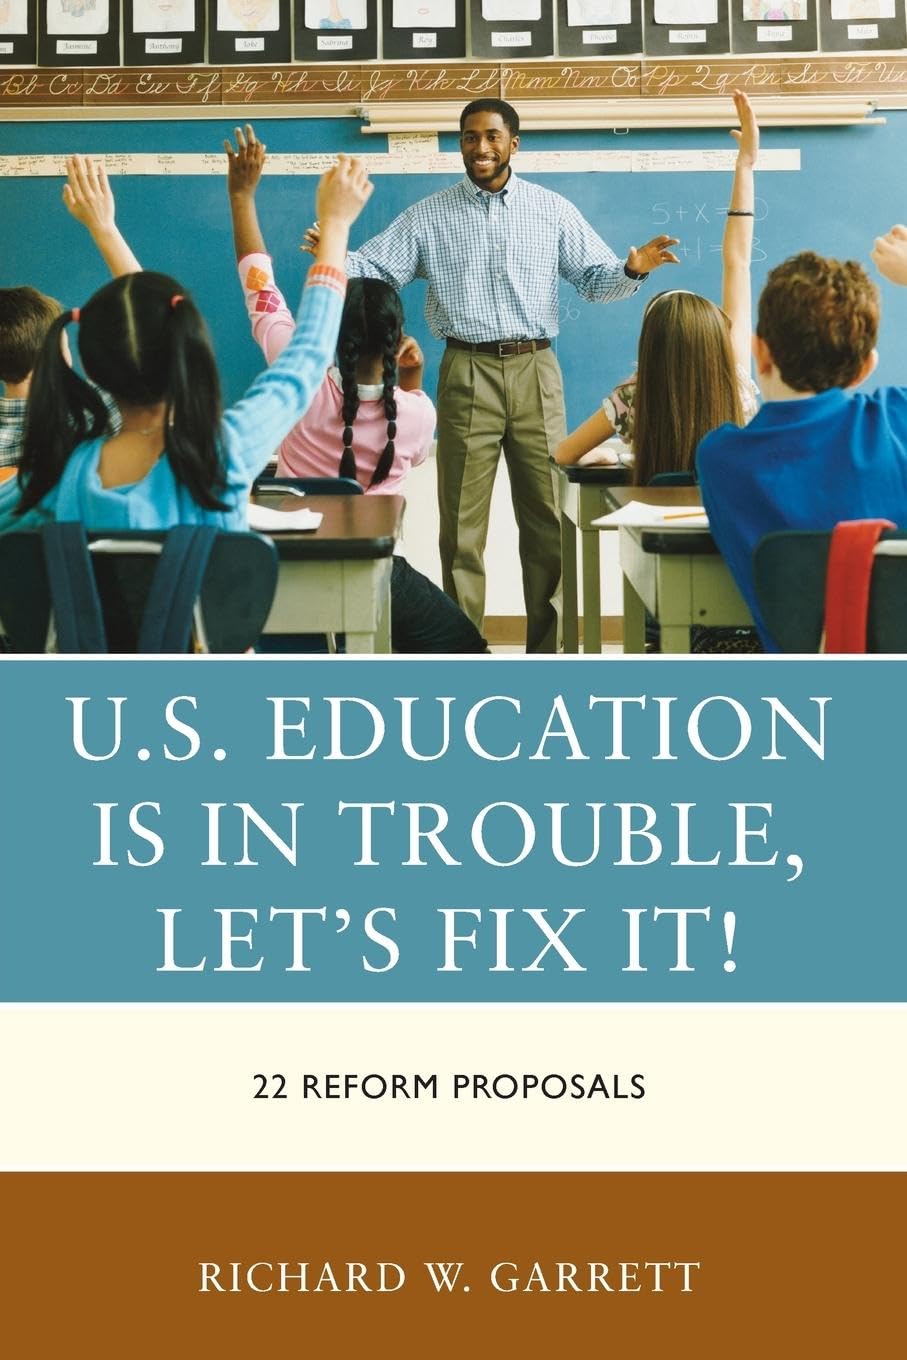 U.S. Education is in Trouble, Let's Fix It!: 22 Reform Proposals by Richard Garrett